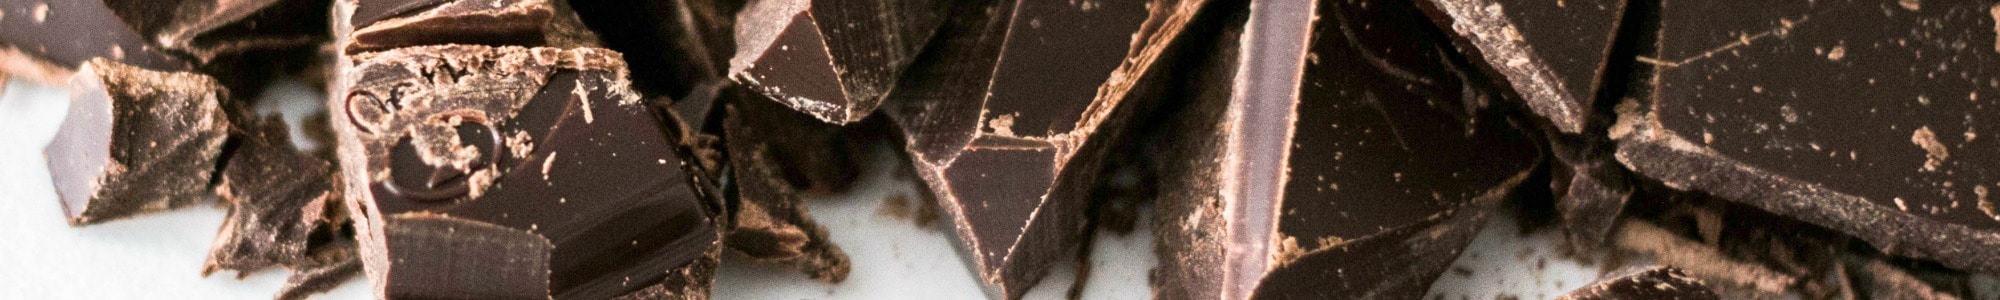 Chocolate banner image